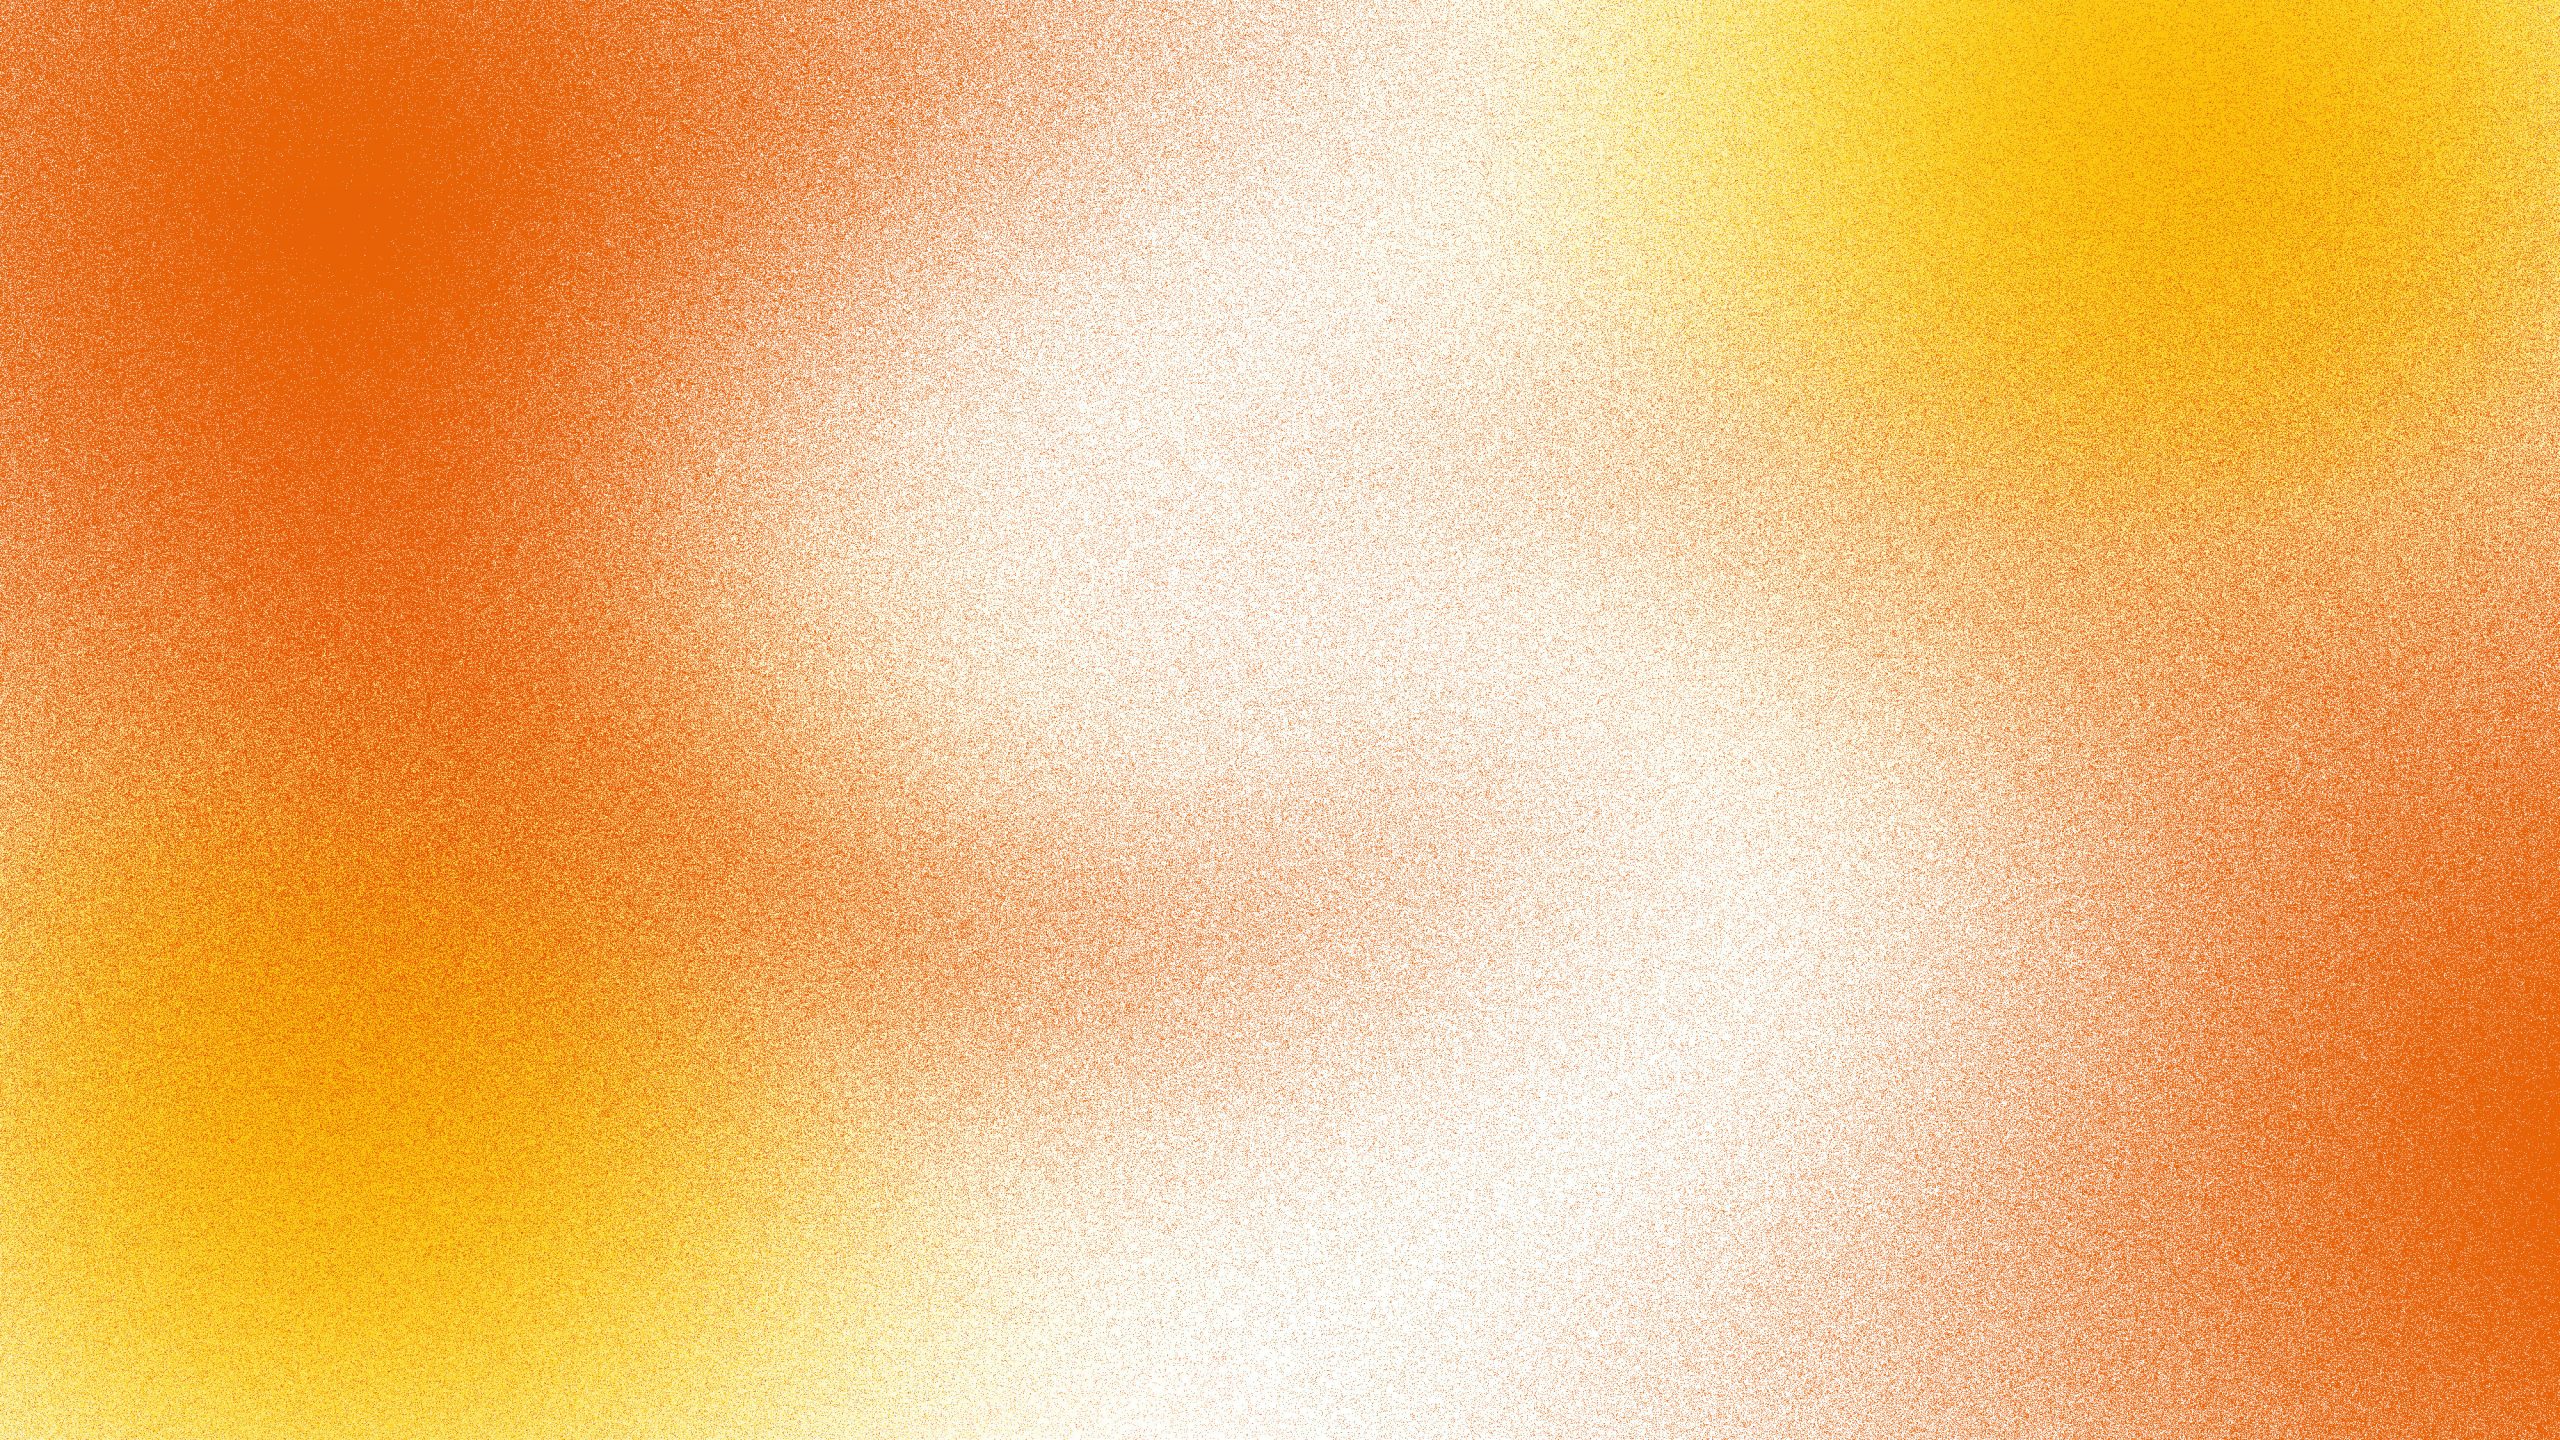 Orange texture abstract background